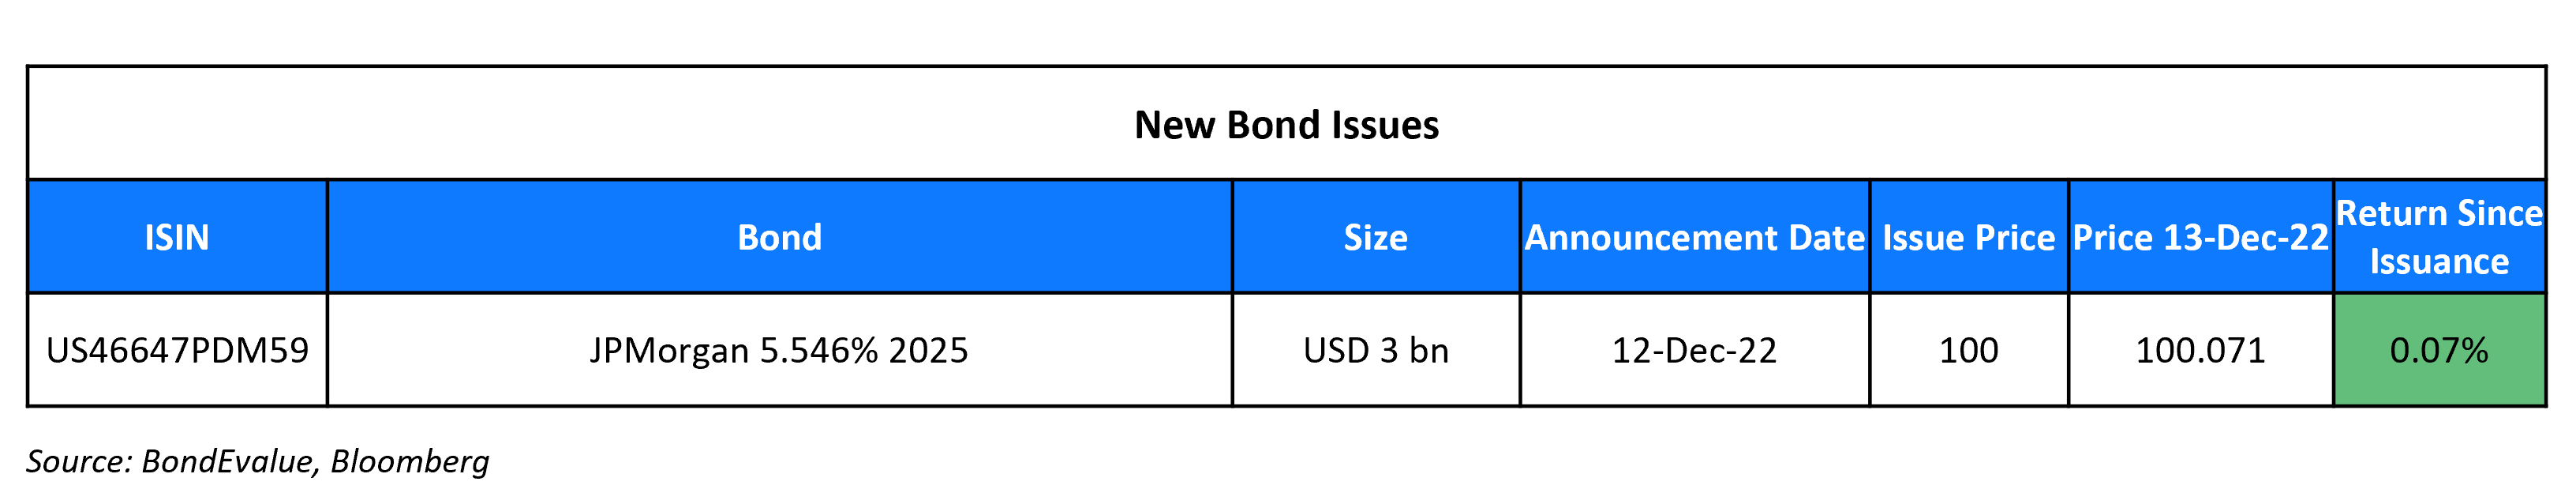 New Bond Issues 13 Dec 22